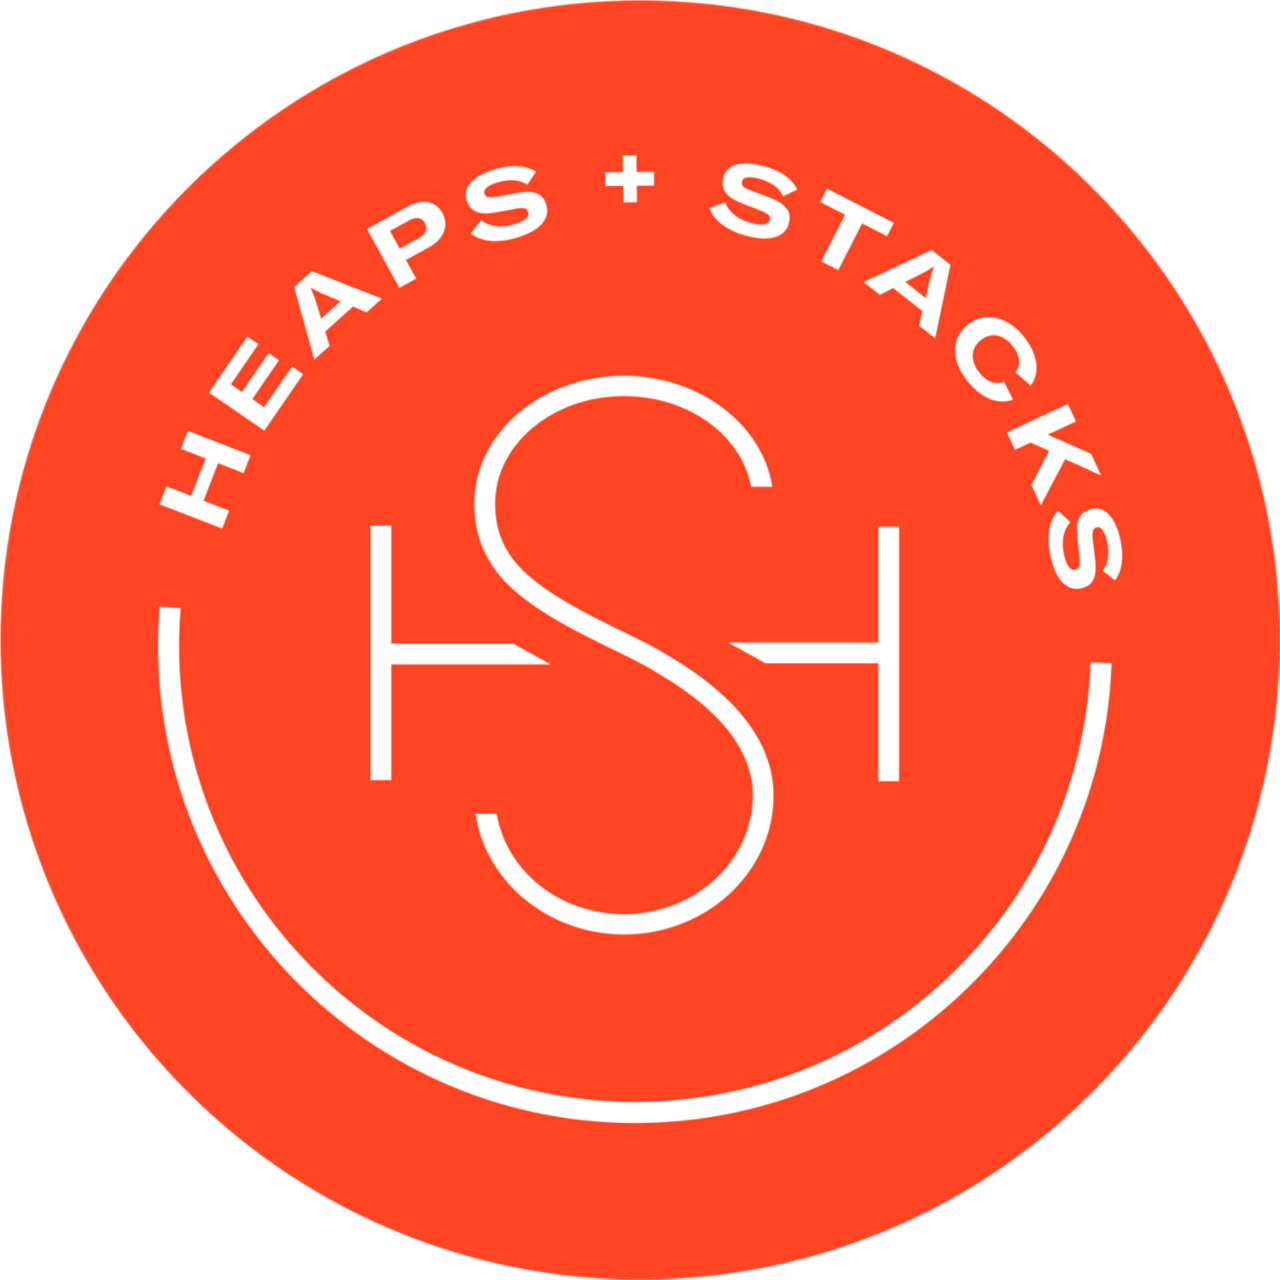 Heaps + Stacks logo